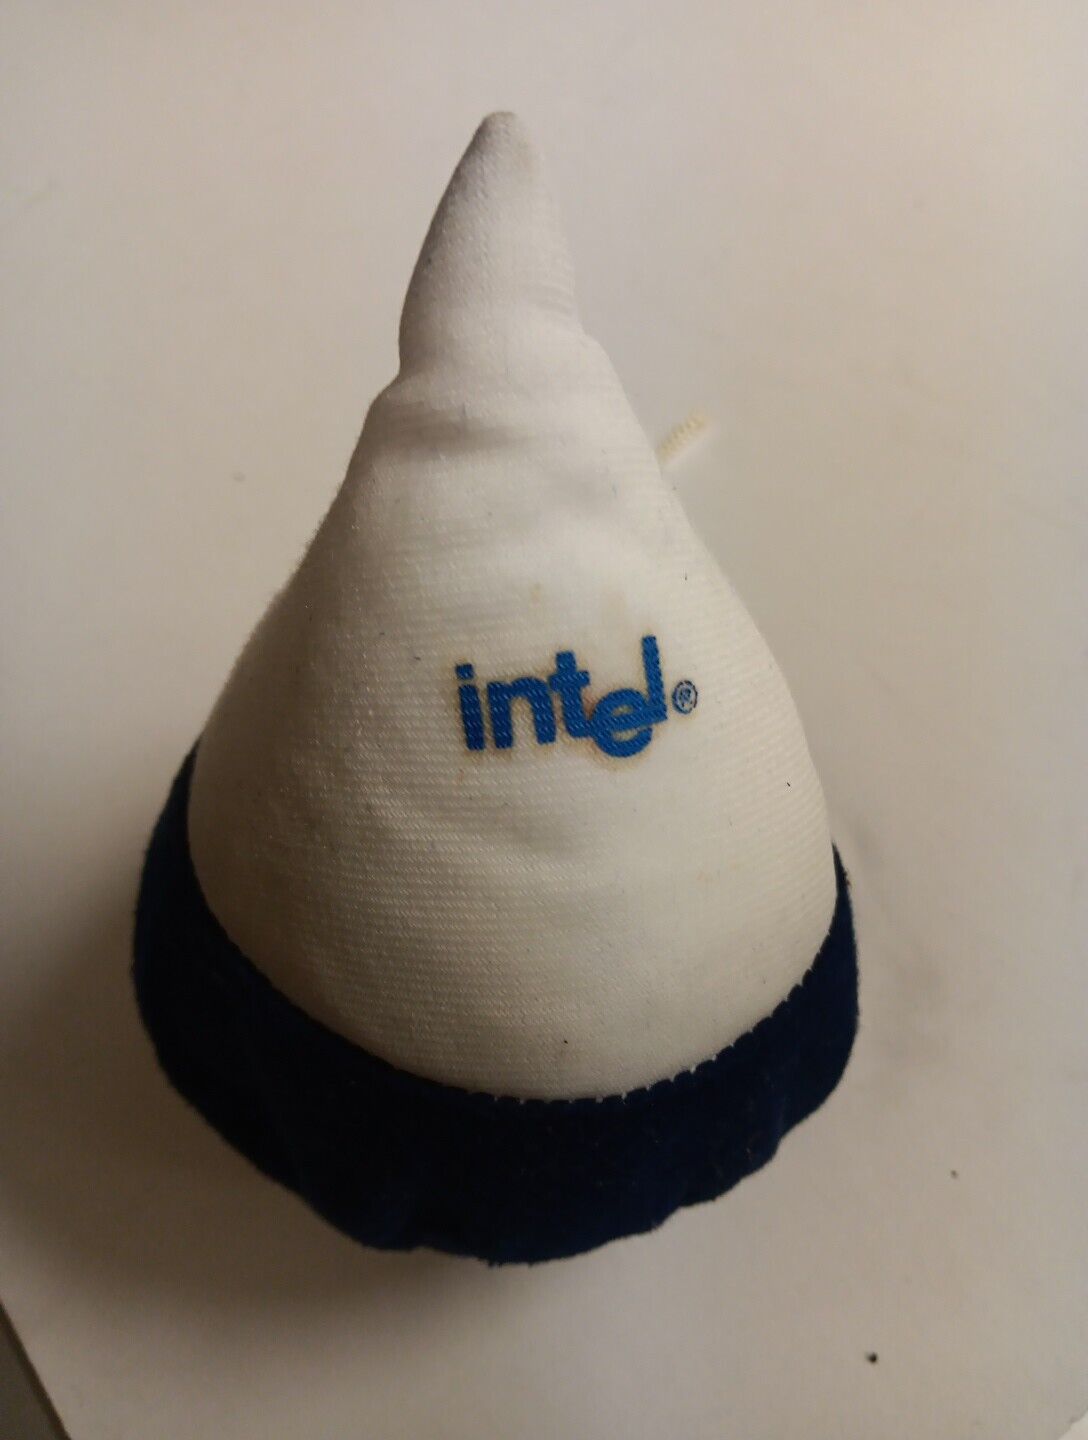 Vintage Intel branded raindrop shaped stress ball